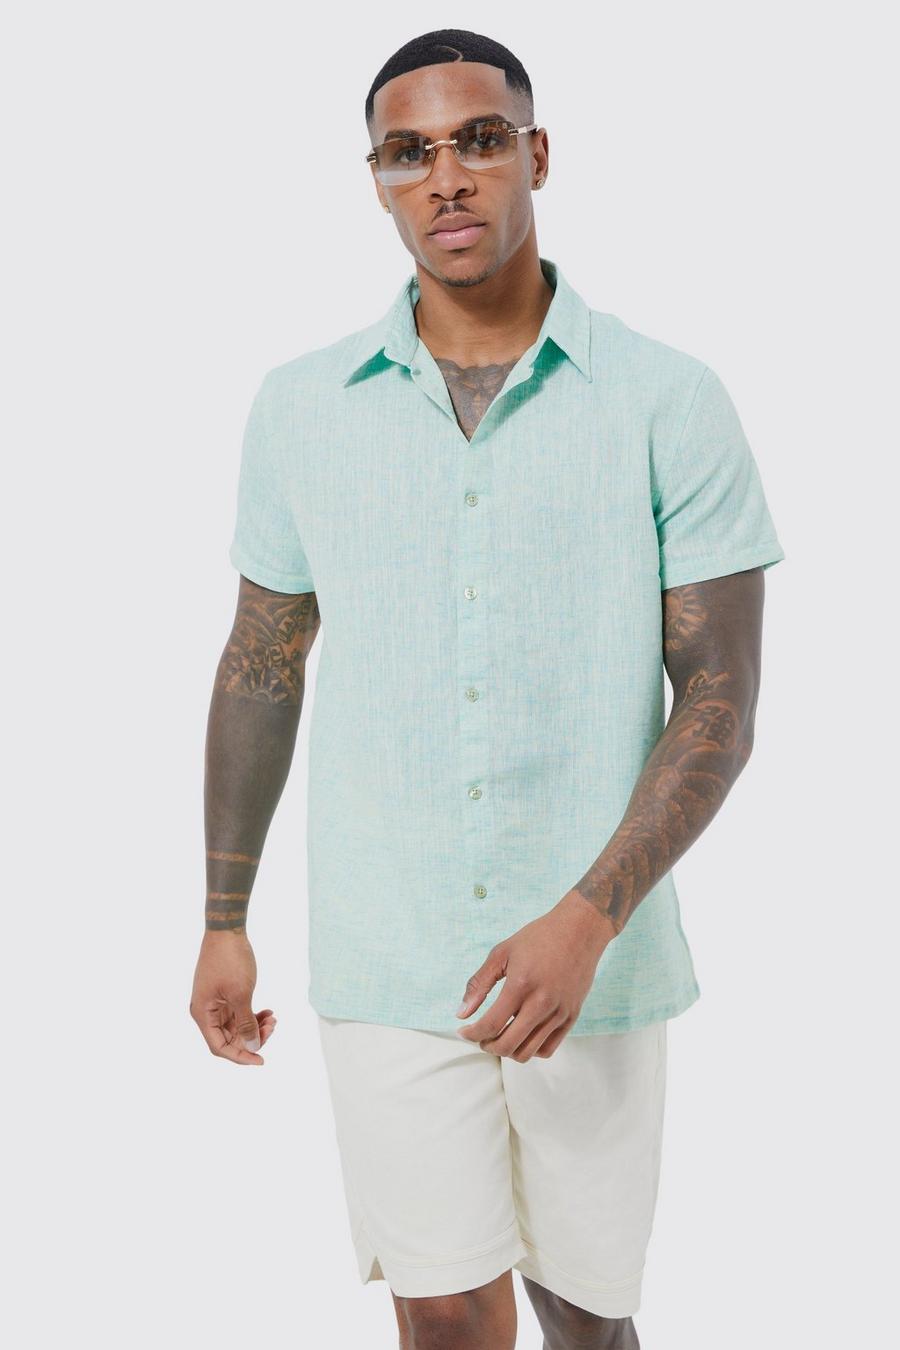 Teal green Short Sleeve Contrast Linen Look Slub Shirt